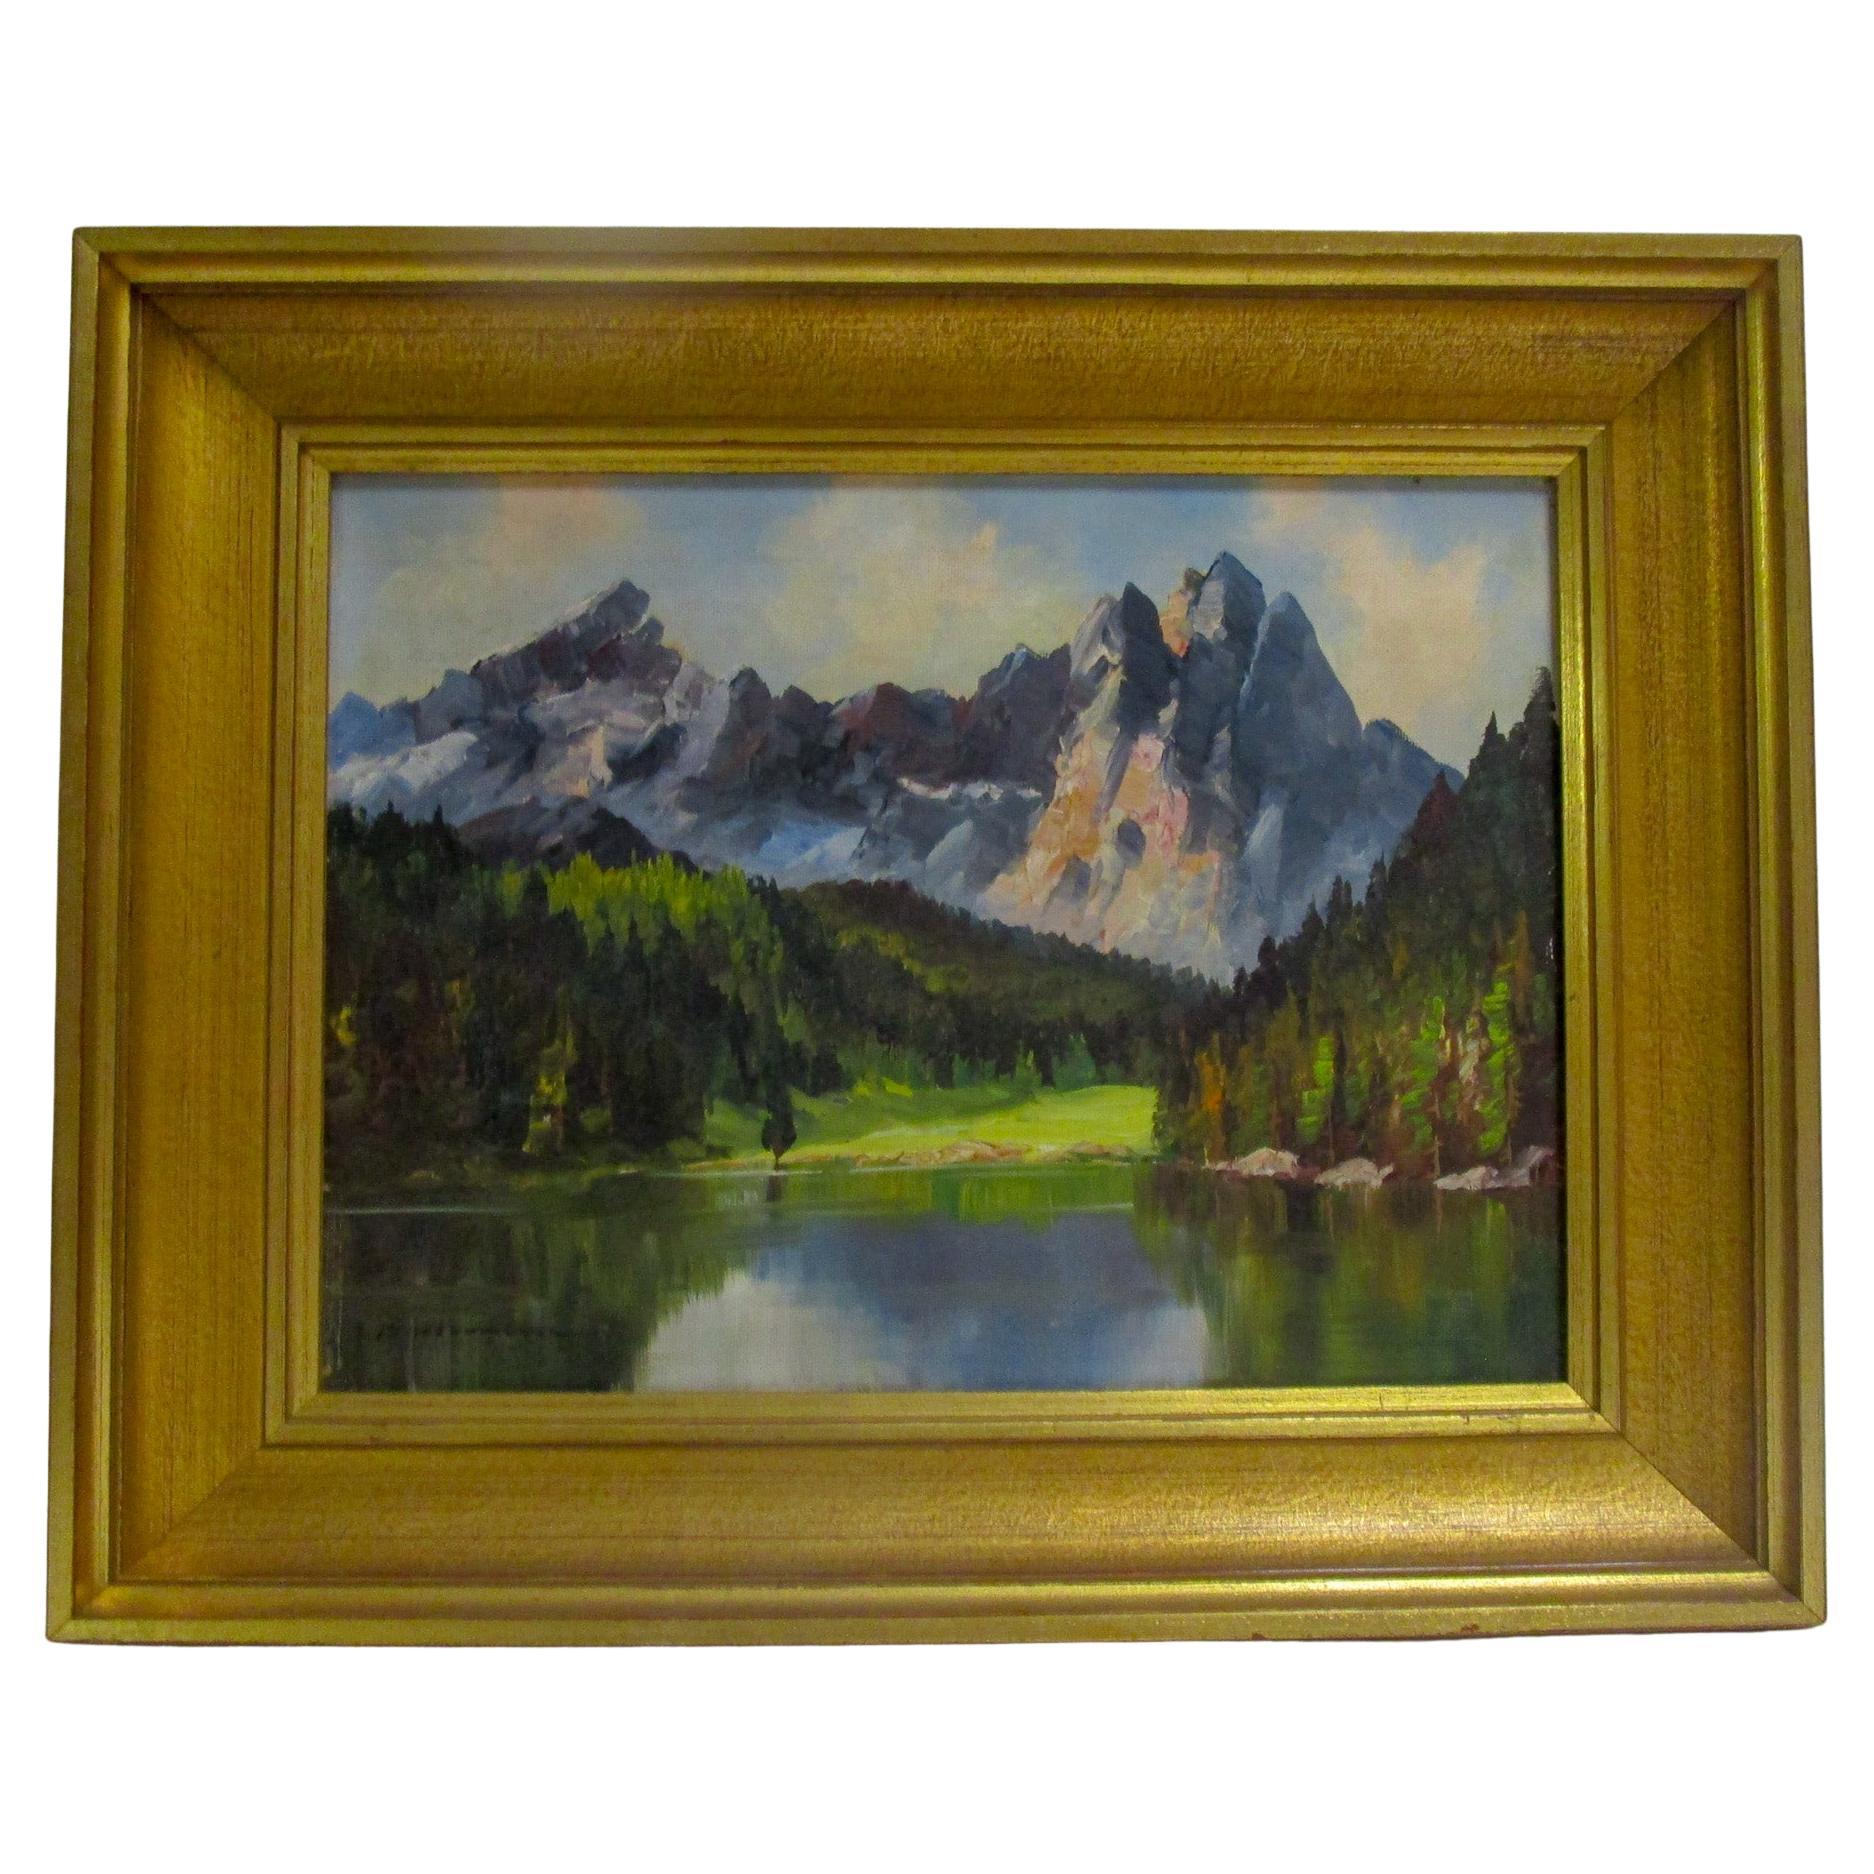 19th Century Oil Painting of Alps Seealpsee, Switzerland